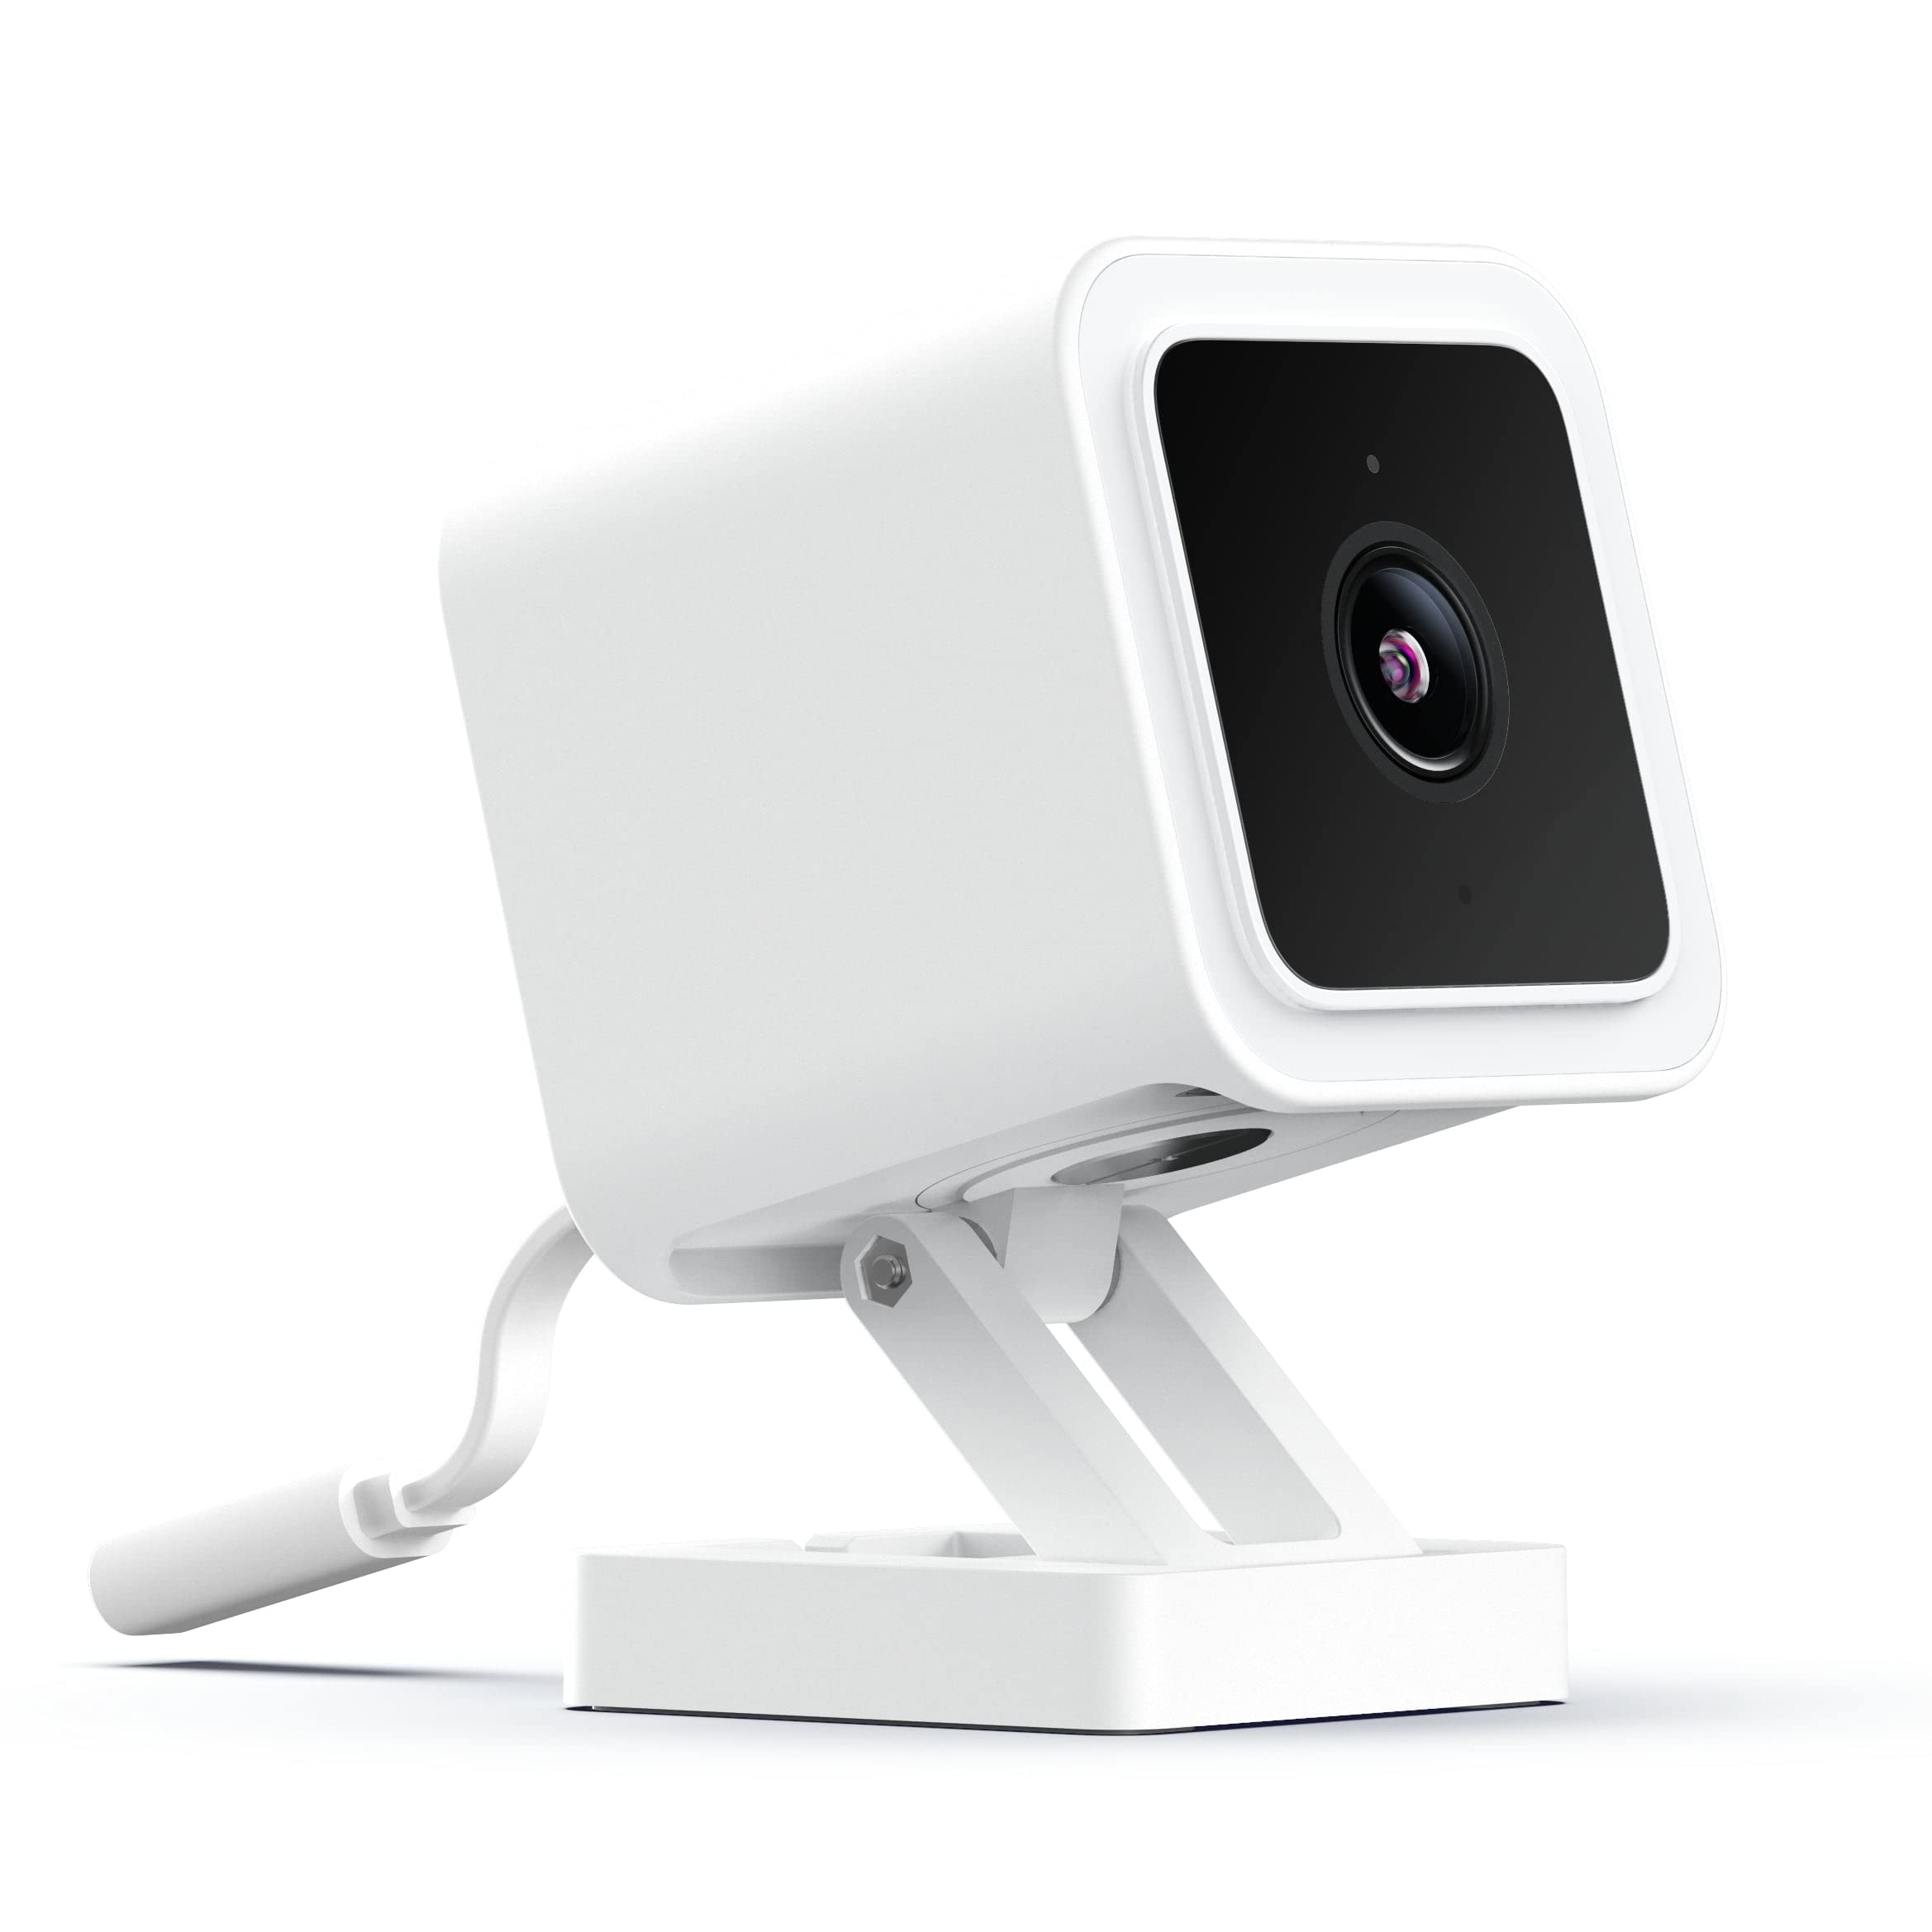 Wyze Cam v3 1080p HD Indoor/Outdoor Security Camera with Color Night Vision $20 $19.98